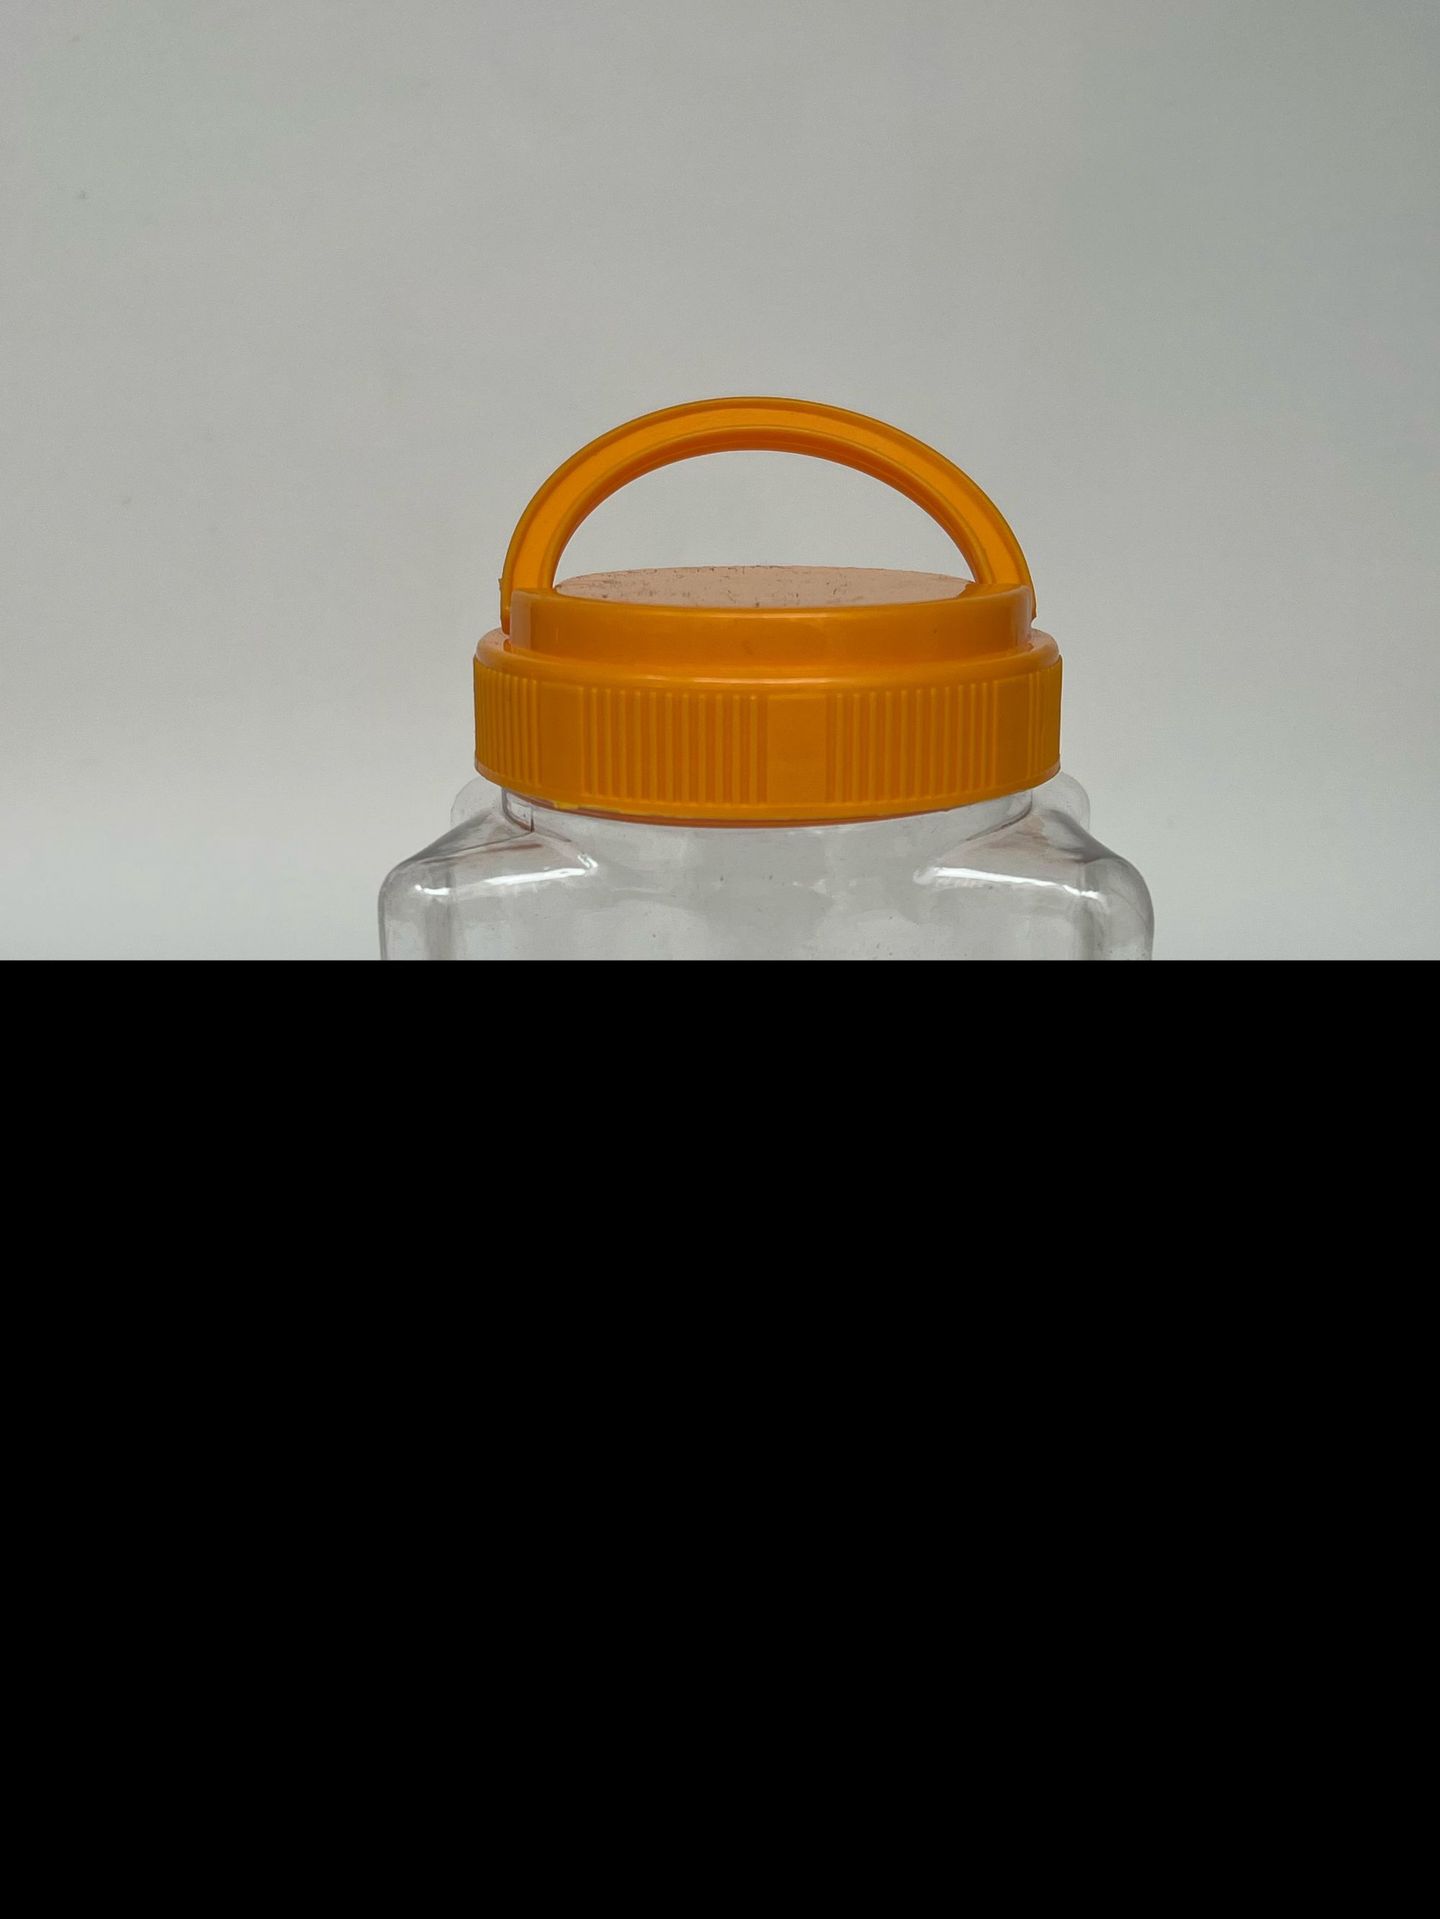 Storage Jar Plastic Bottle Factory Direct Supply